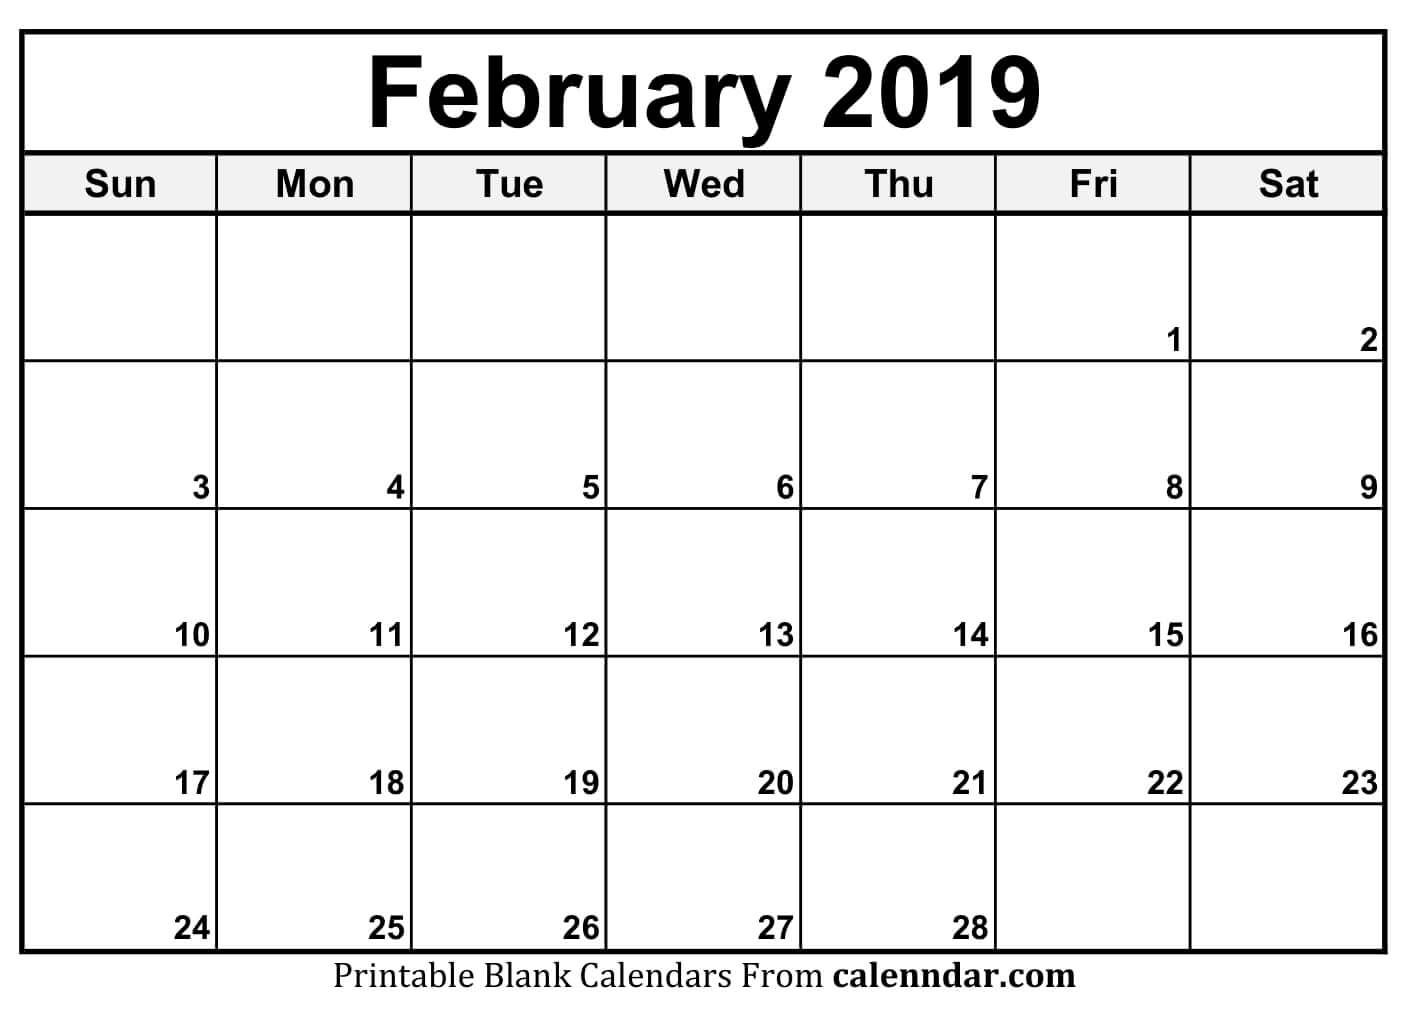 Free Printable Feb 2019 Calendar | Printable Blank Calendar within Free 2019 Calendar With Space To Write